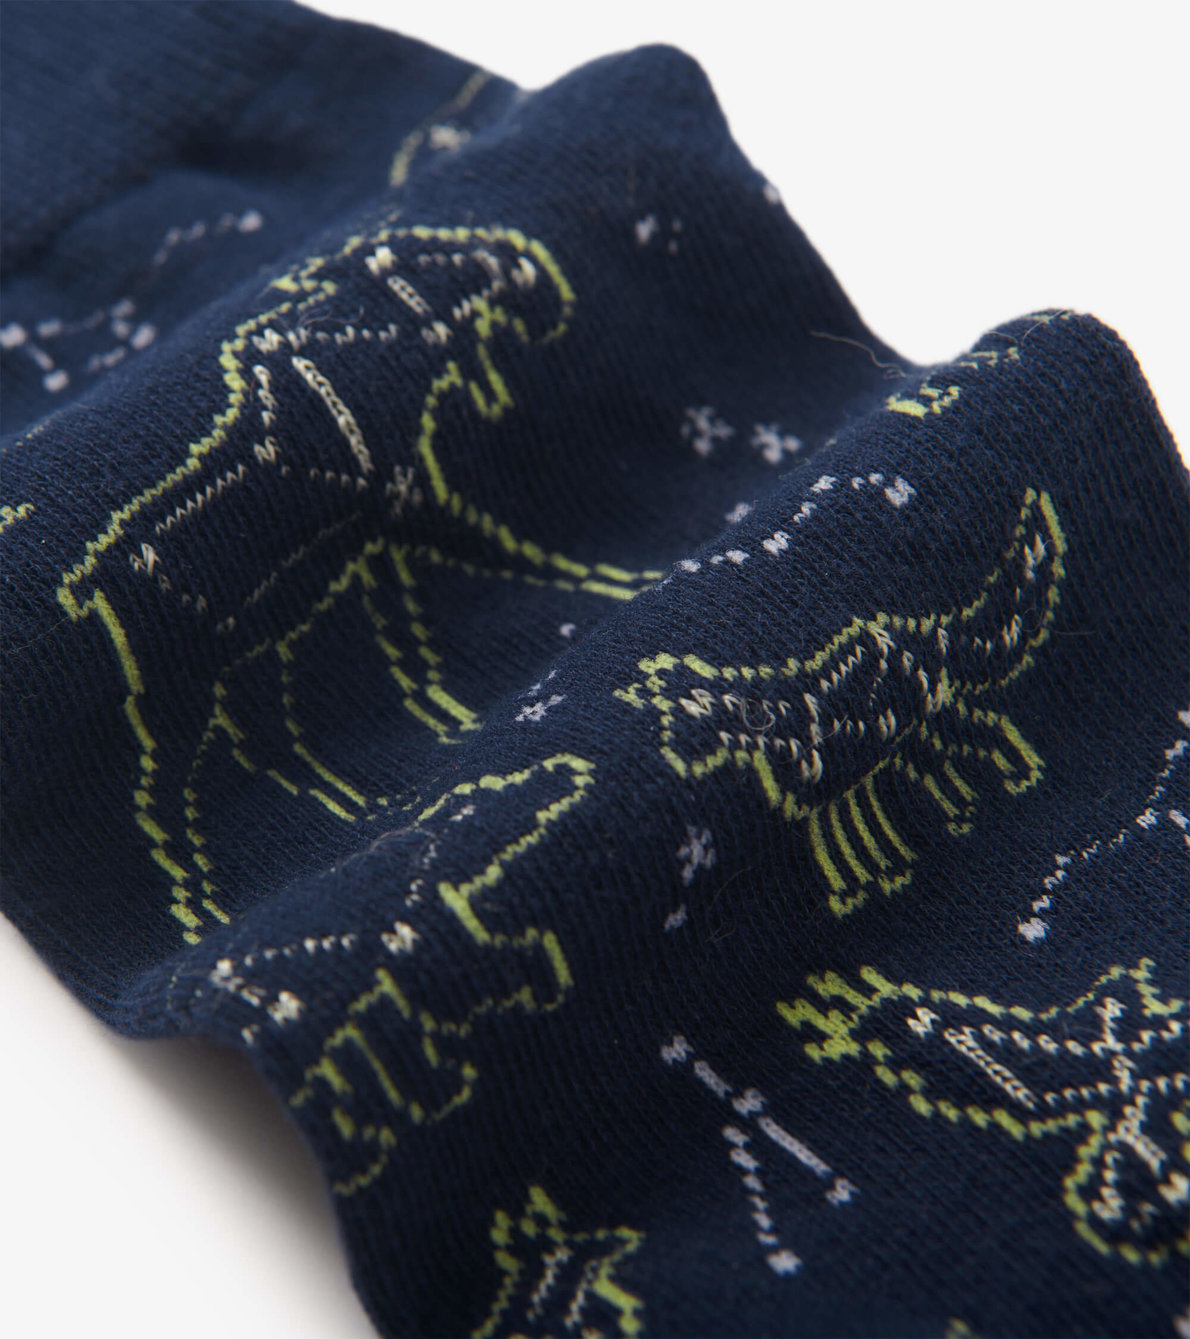 View larger image of Animal Constellations Women's Crew Socks